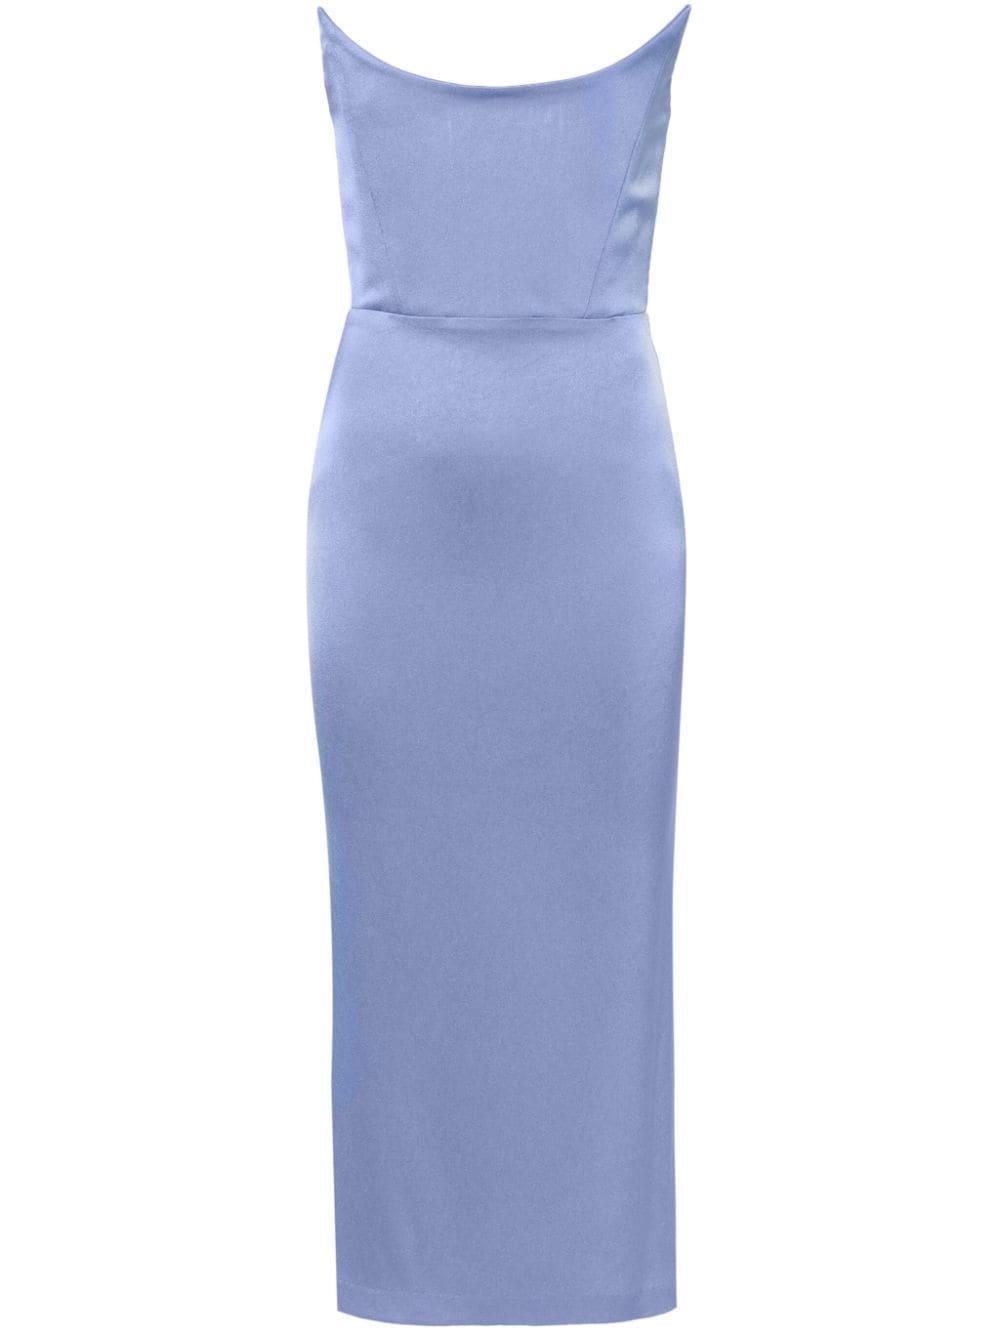 Alex Perry corset-style strapless dress - Blue von Alex Perry